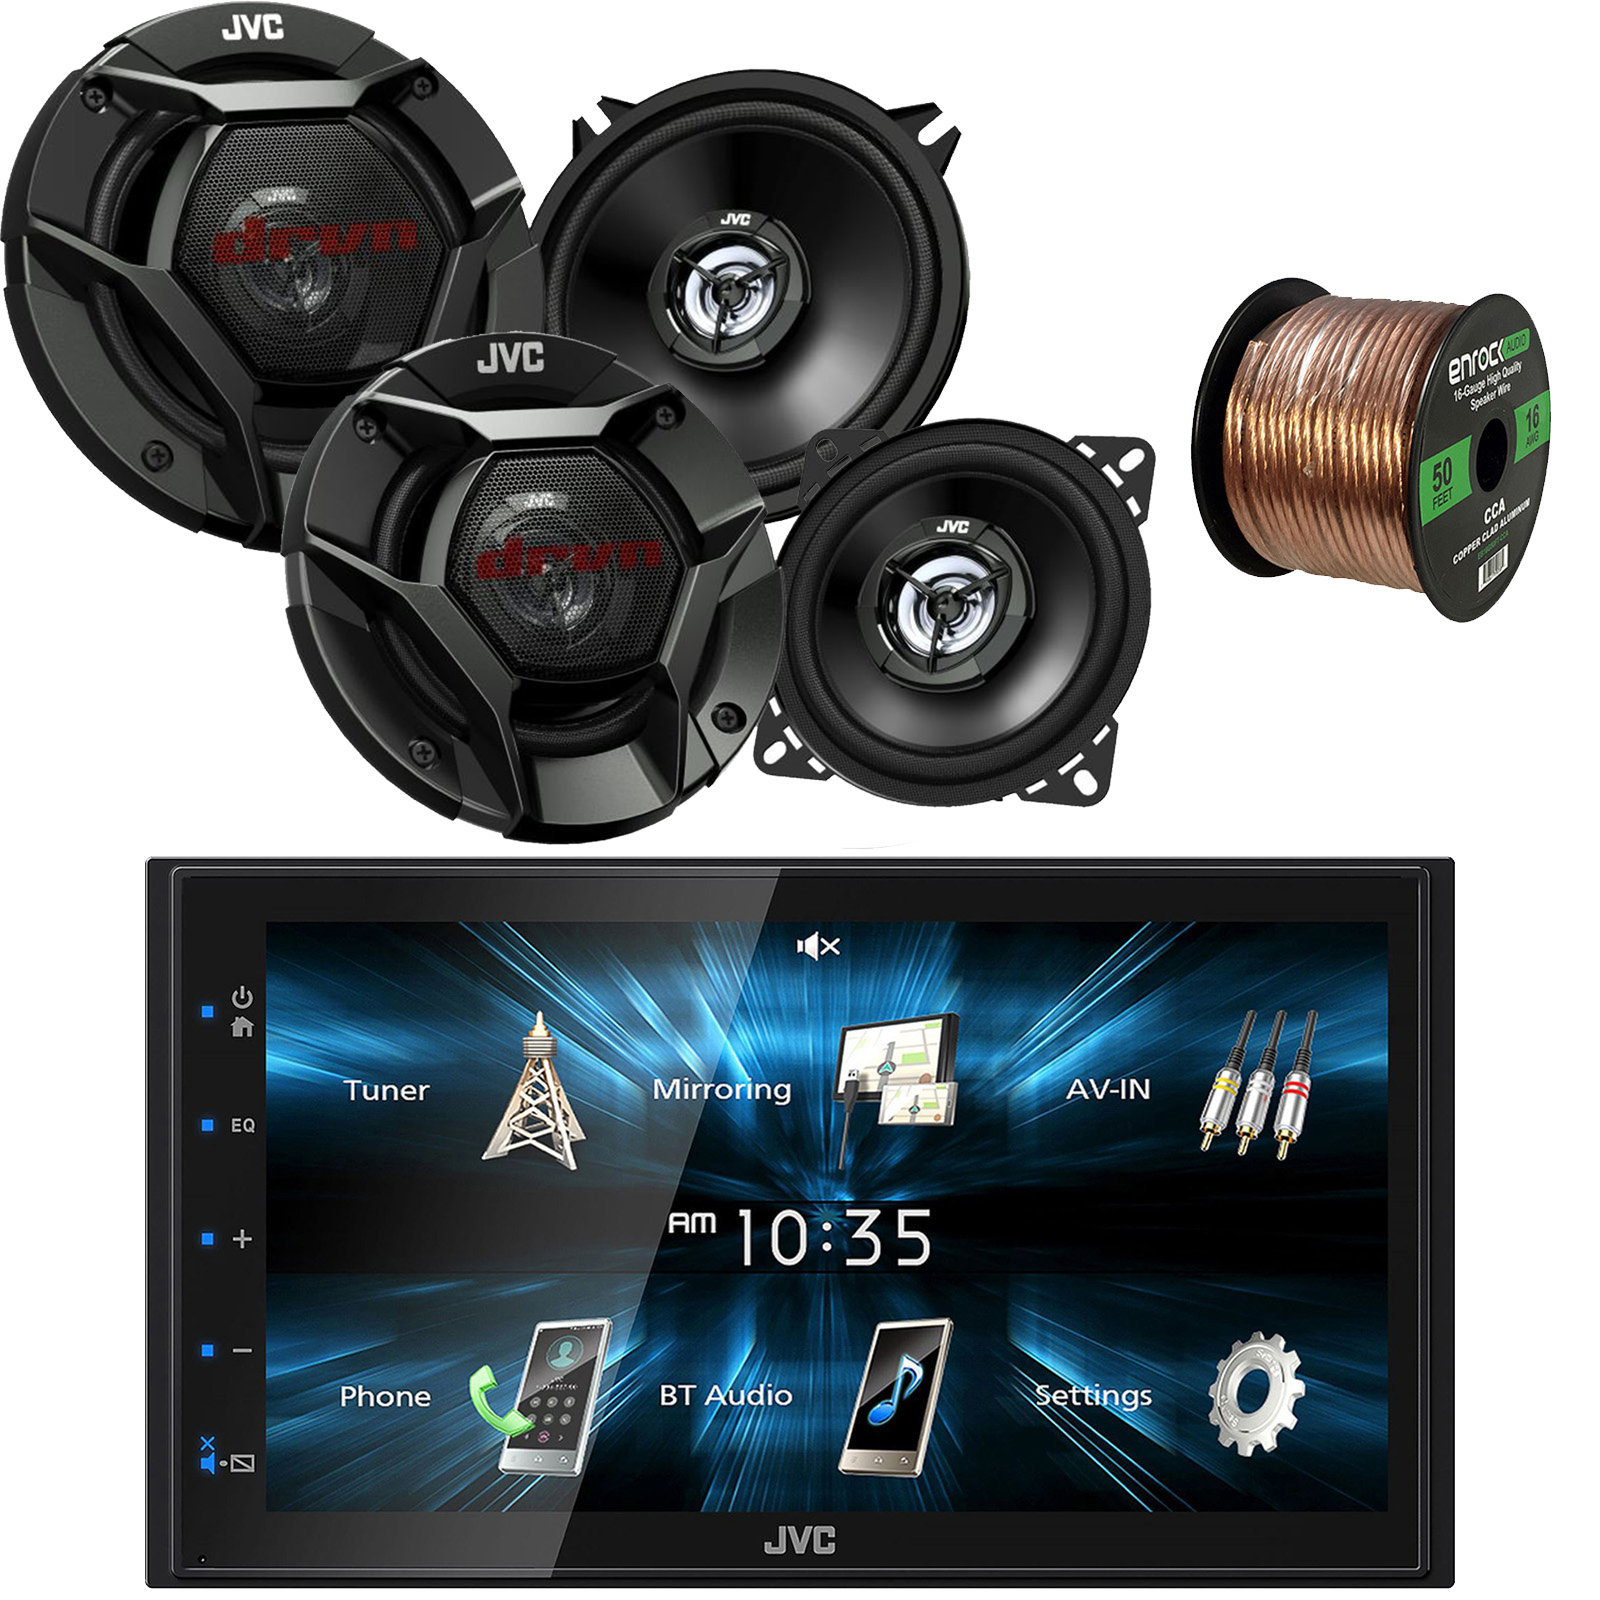 Double DIN Digital Media Bluetooth USB AM/FM Stereo Radio Car Audio  Receiver w/ 6.8 Touchscreen， 2x 5.25 2-Way Coaxial 260 Watt Speakers， 2x  Auto-